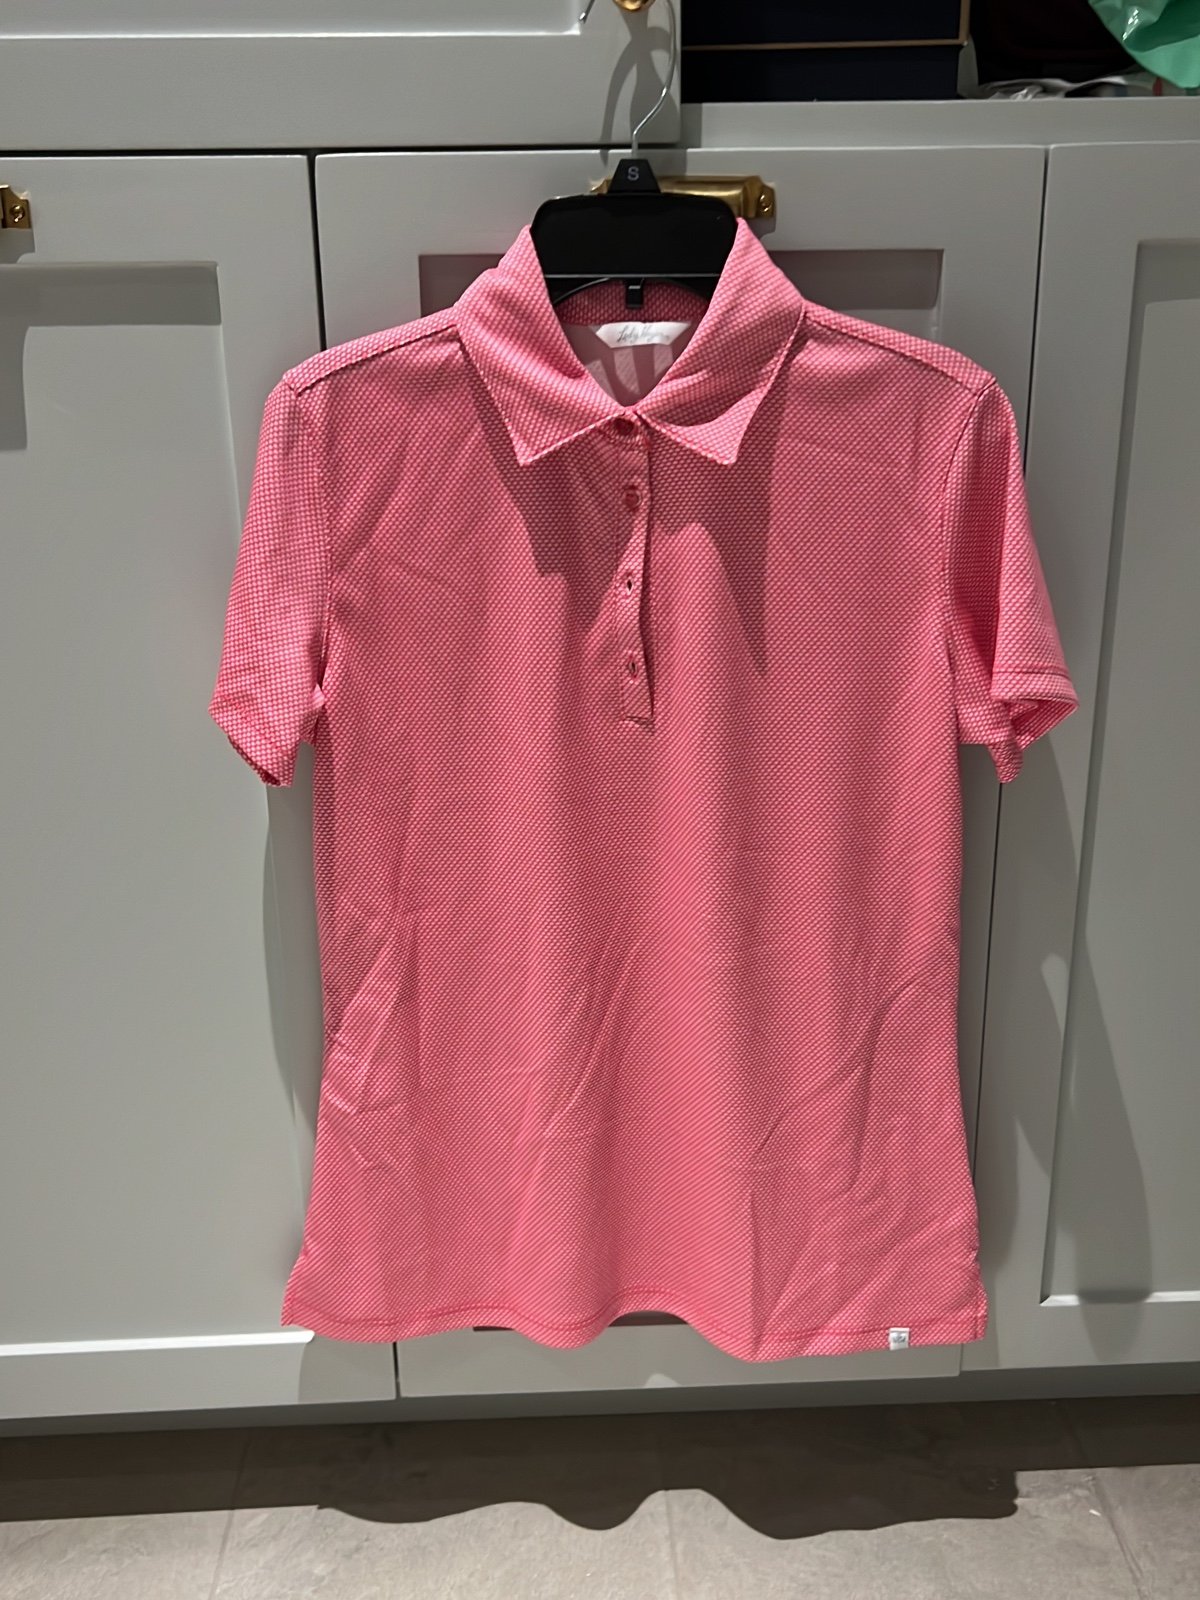 floor price Lady Hagen - short sleeve polo shirt - size